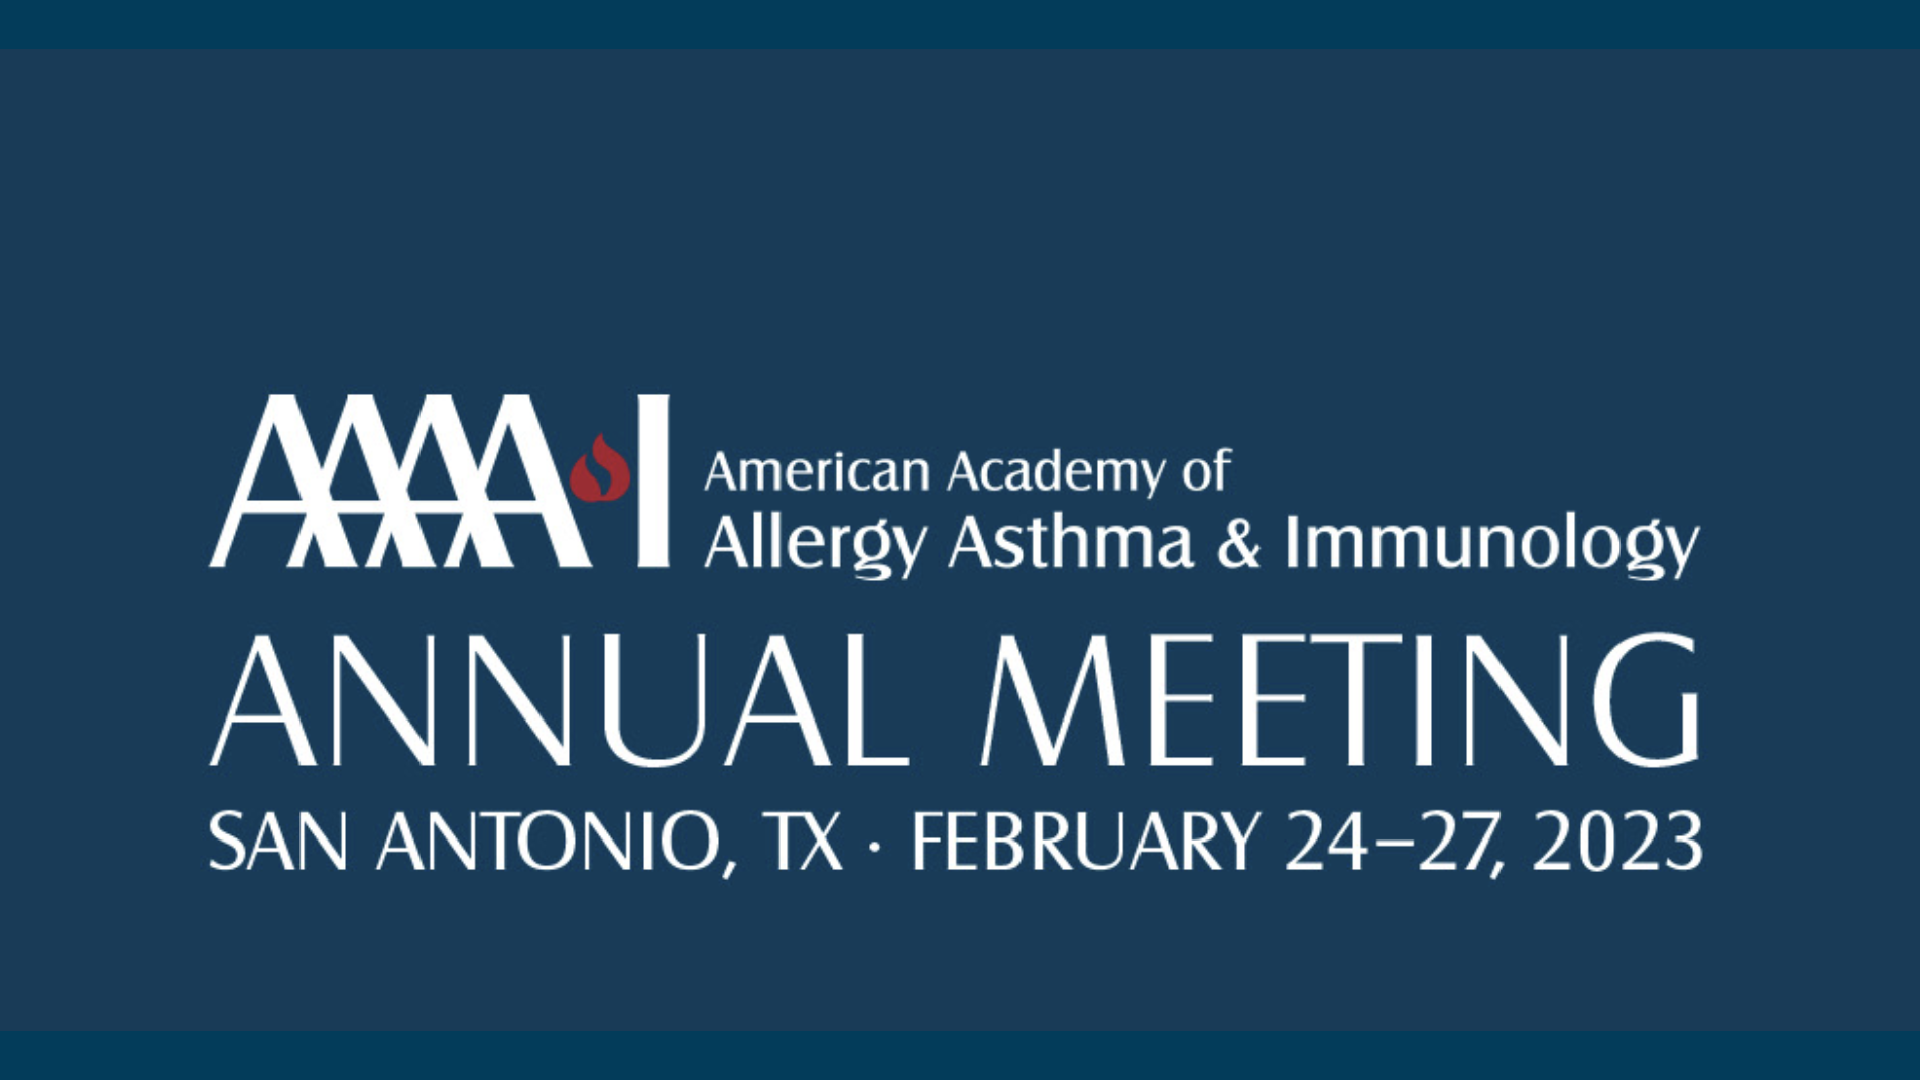 The American Academy of Allergy, Asthma & Immunology (AAAAI) congress